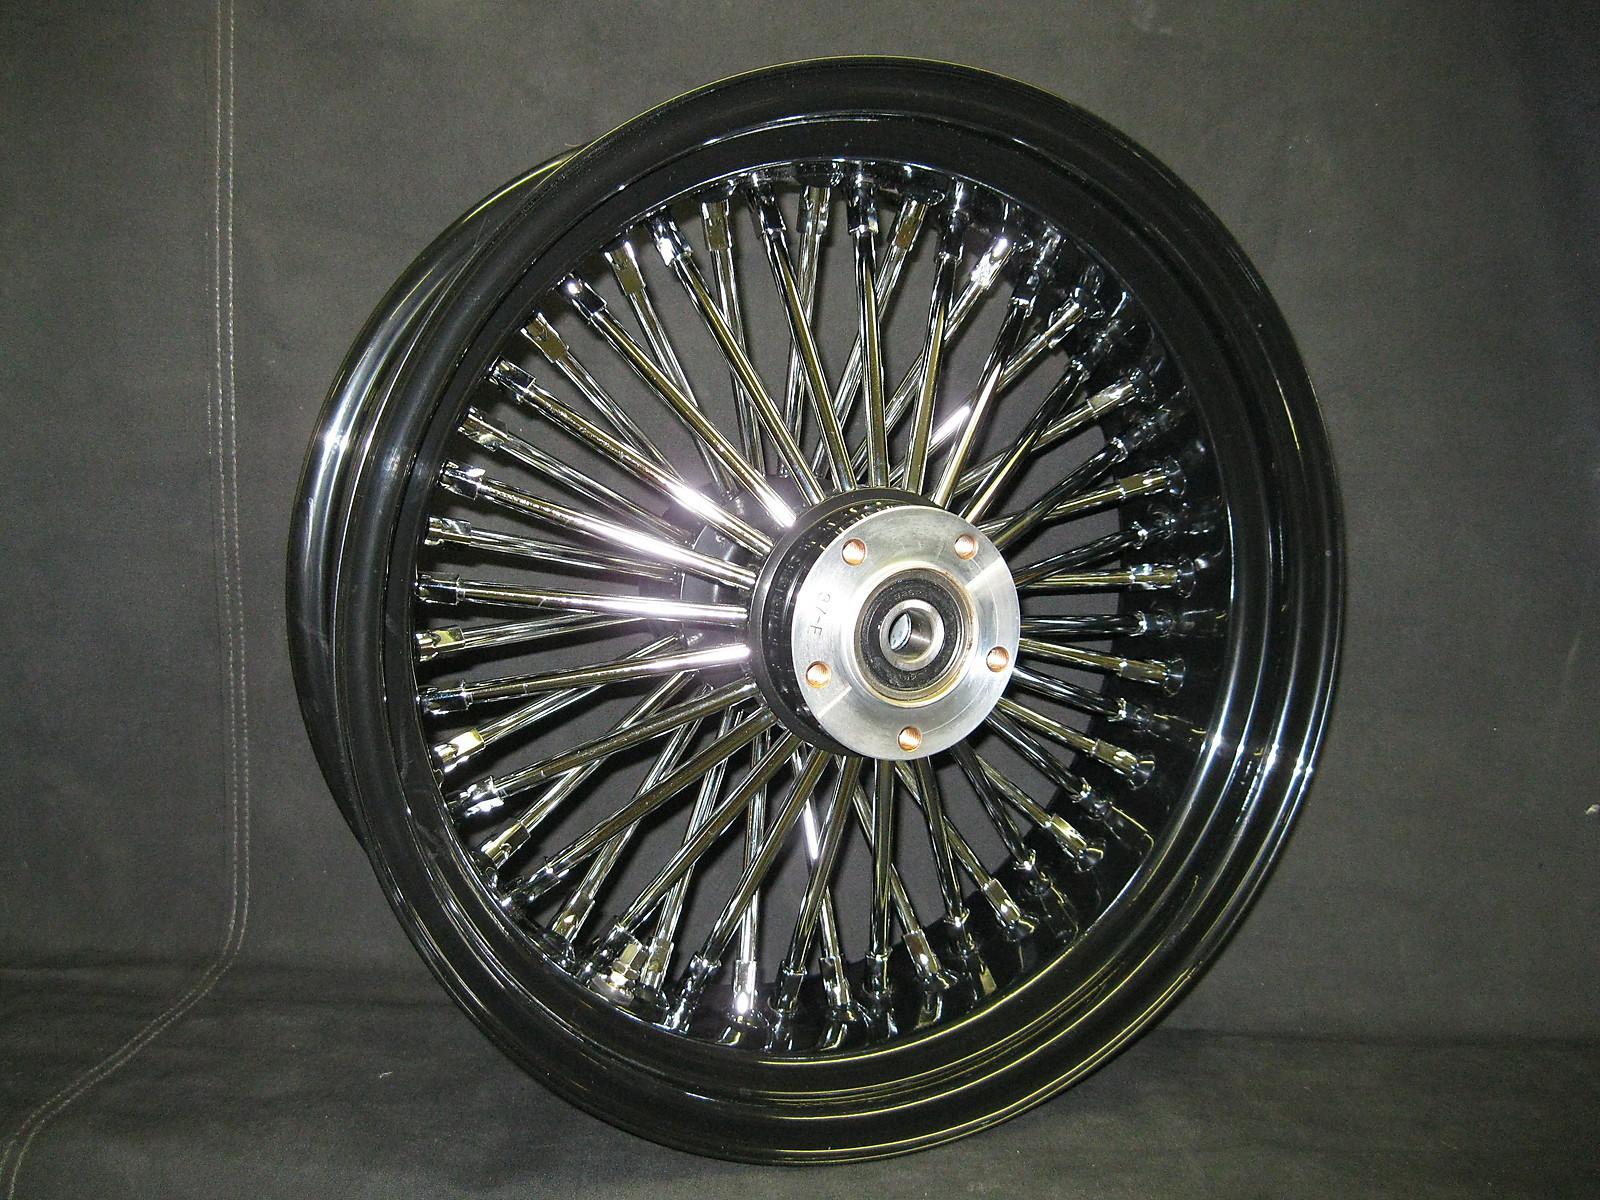 Chrome & black ultima 48 fat king spoke 16x5.5" rear wheel for harley & customs